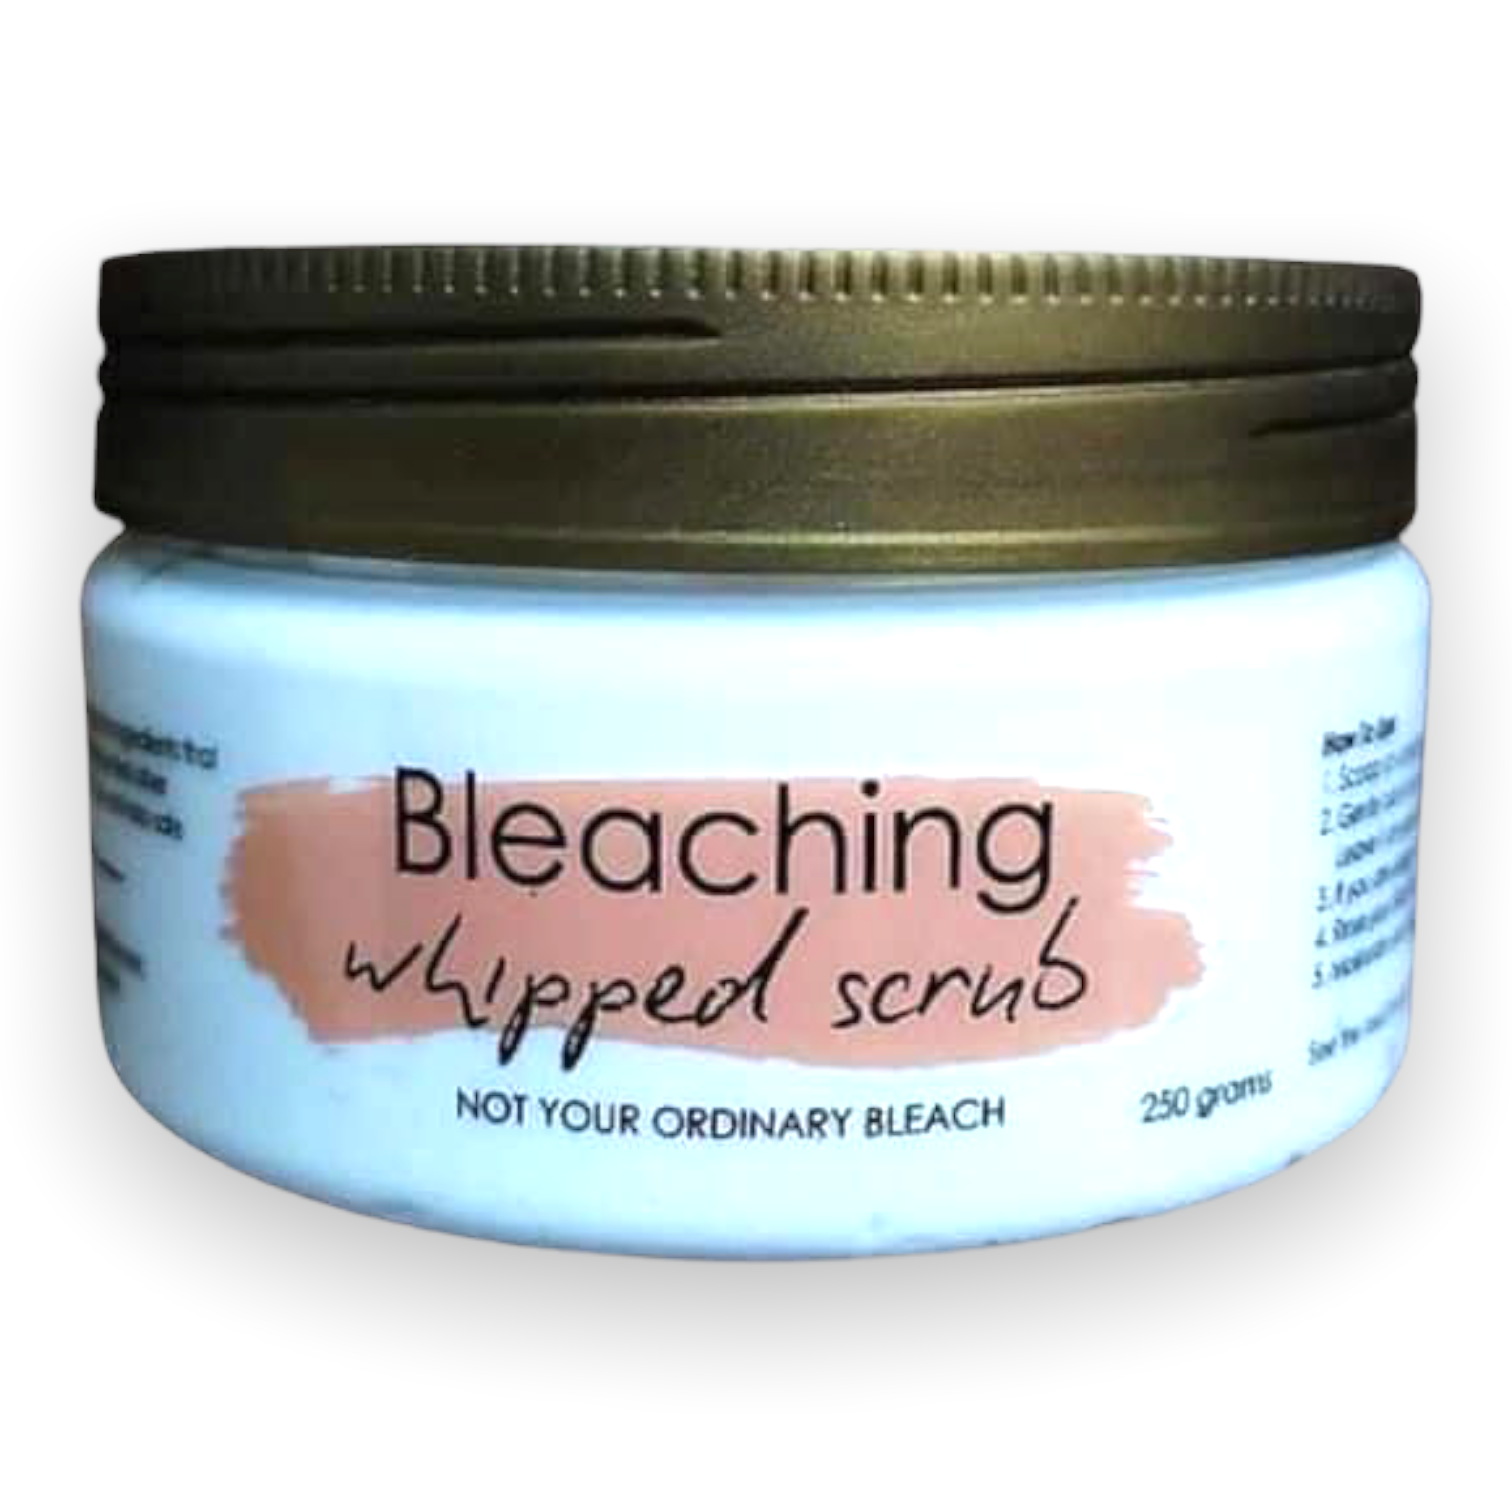 K-Beaute Bleaching Whipped SCRUB 250g